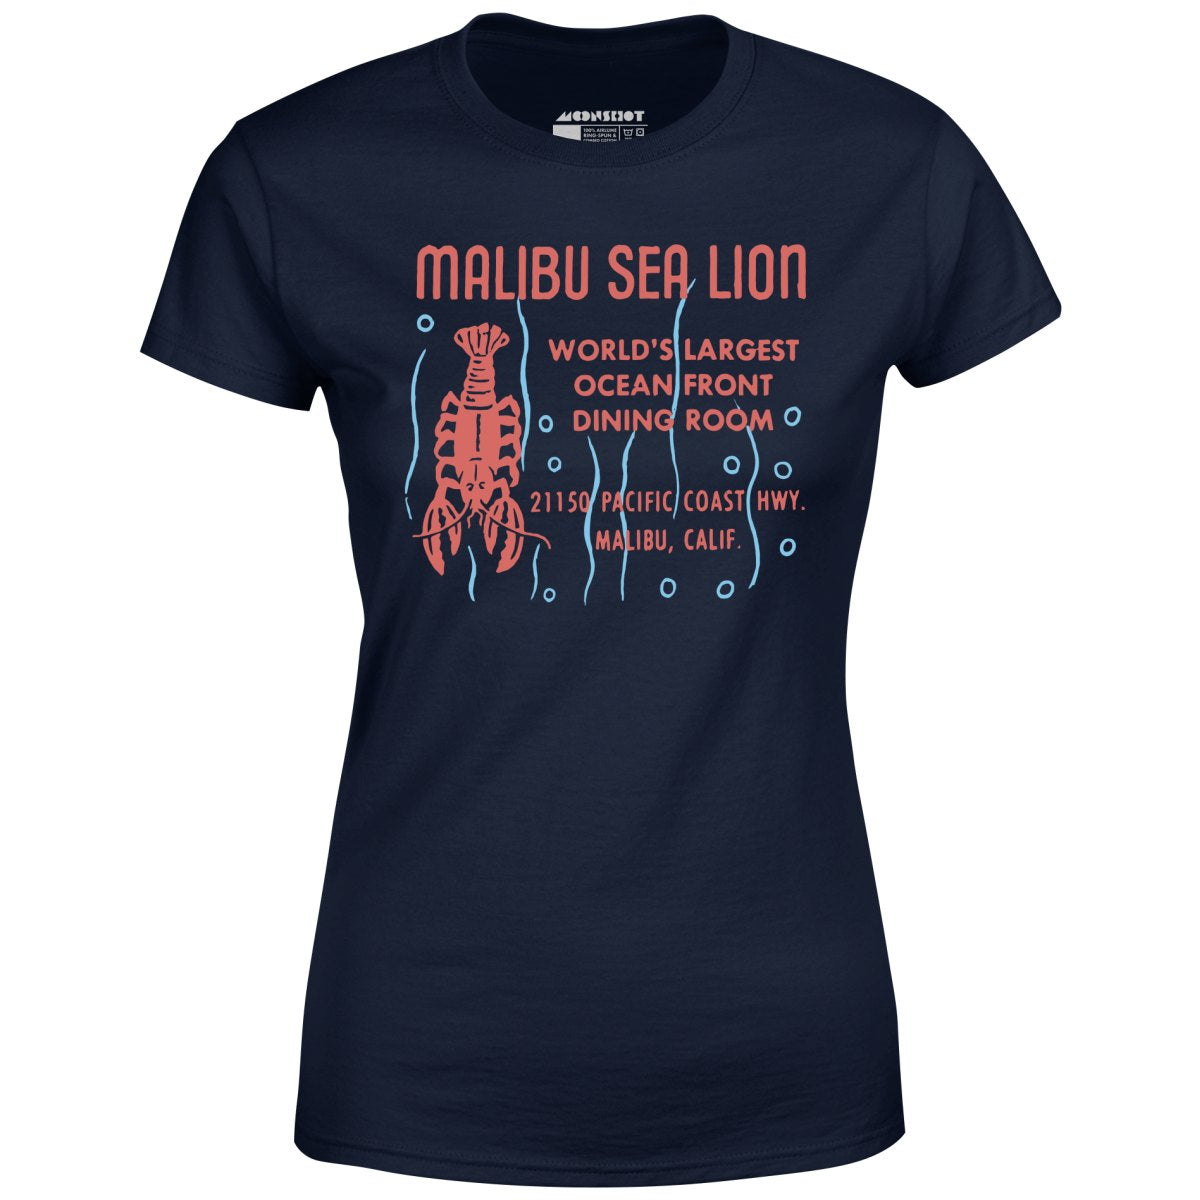 Malibu Sea Lion - Malibu, CA - Vintage Restaurant - Women's T-Shirt